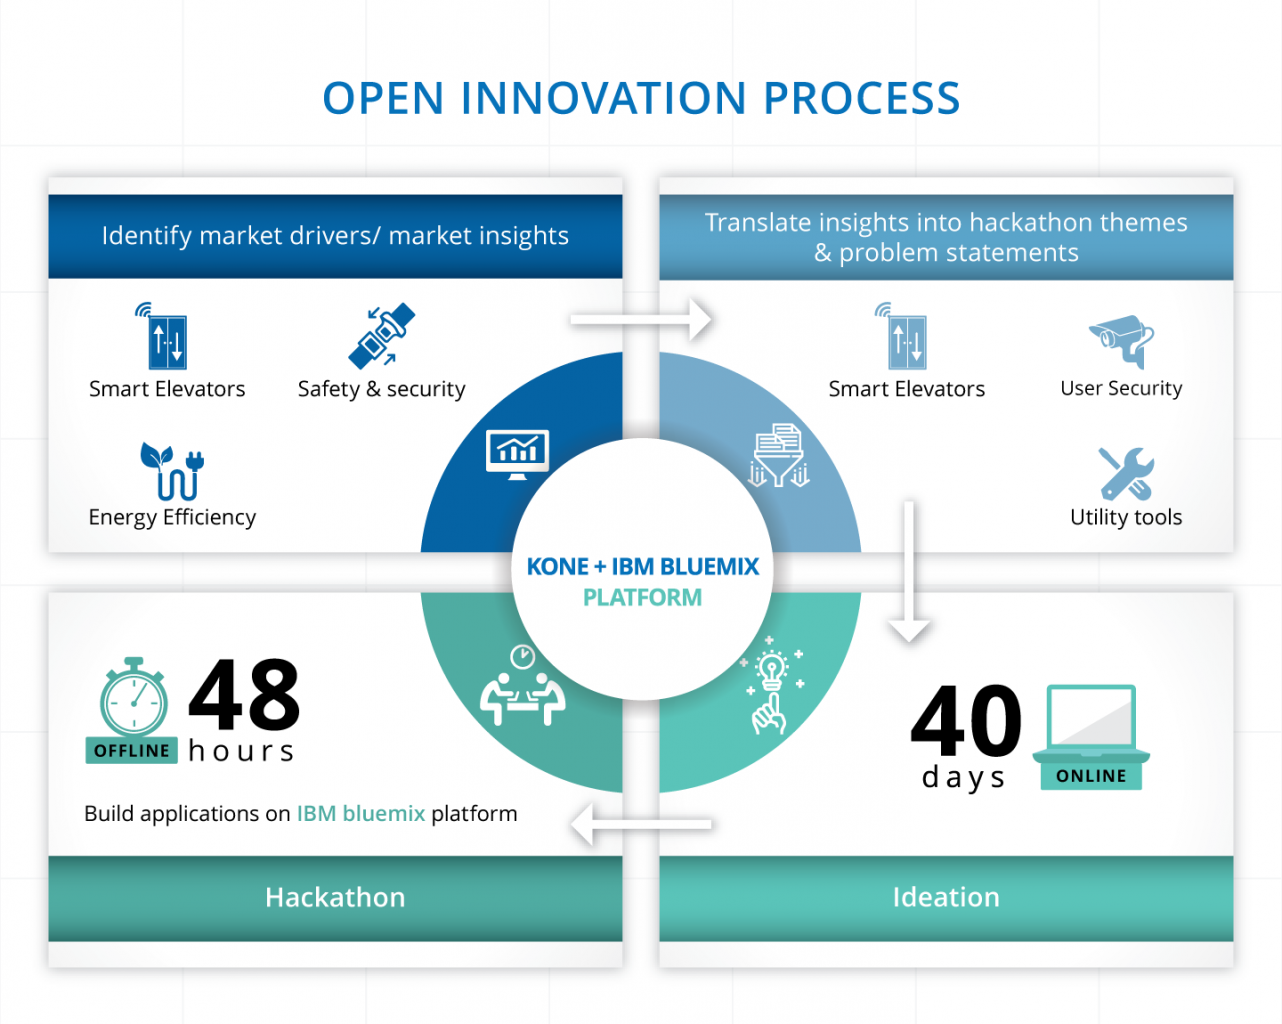 presentation about open innovation